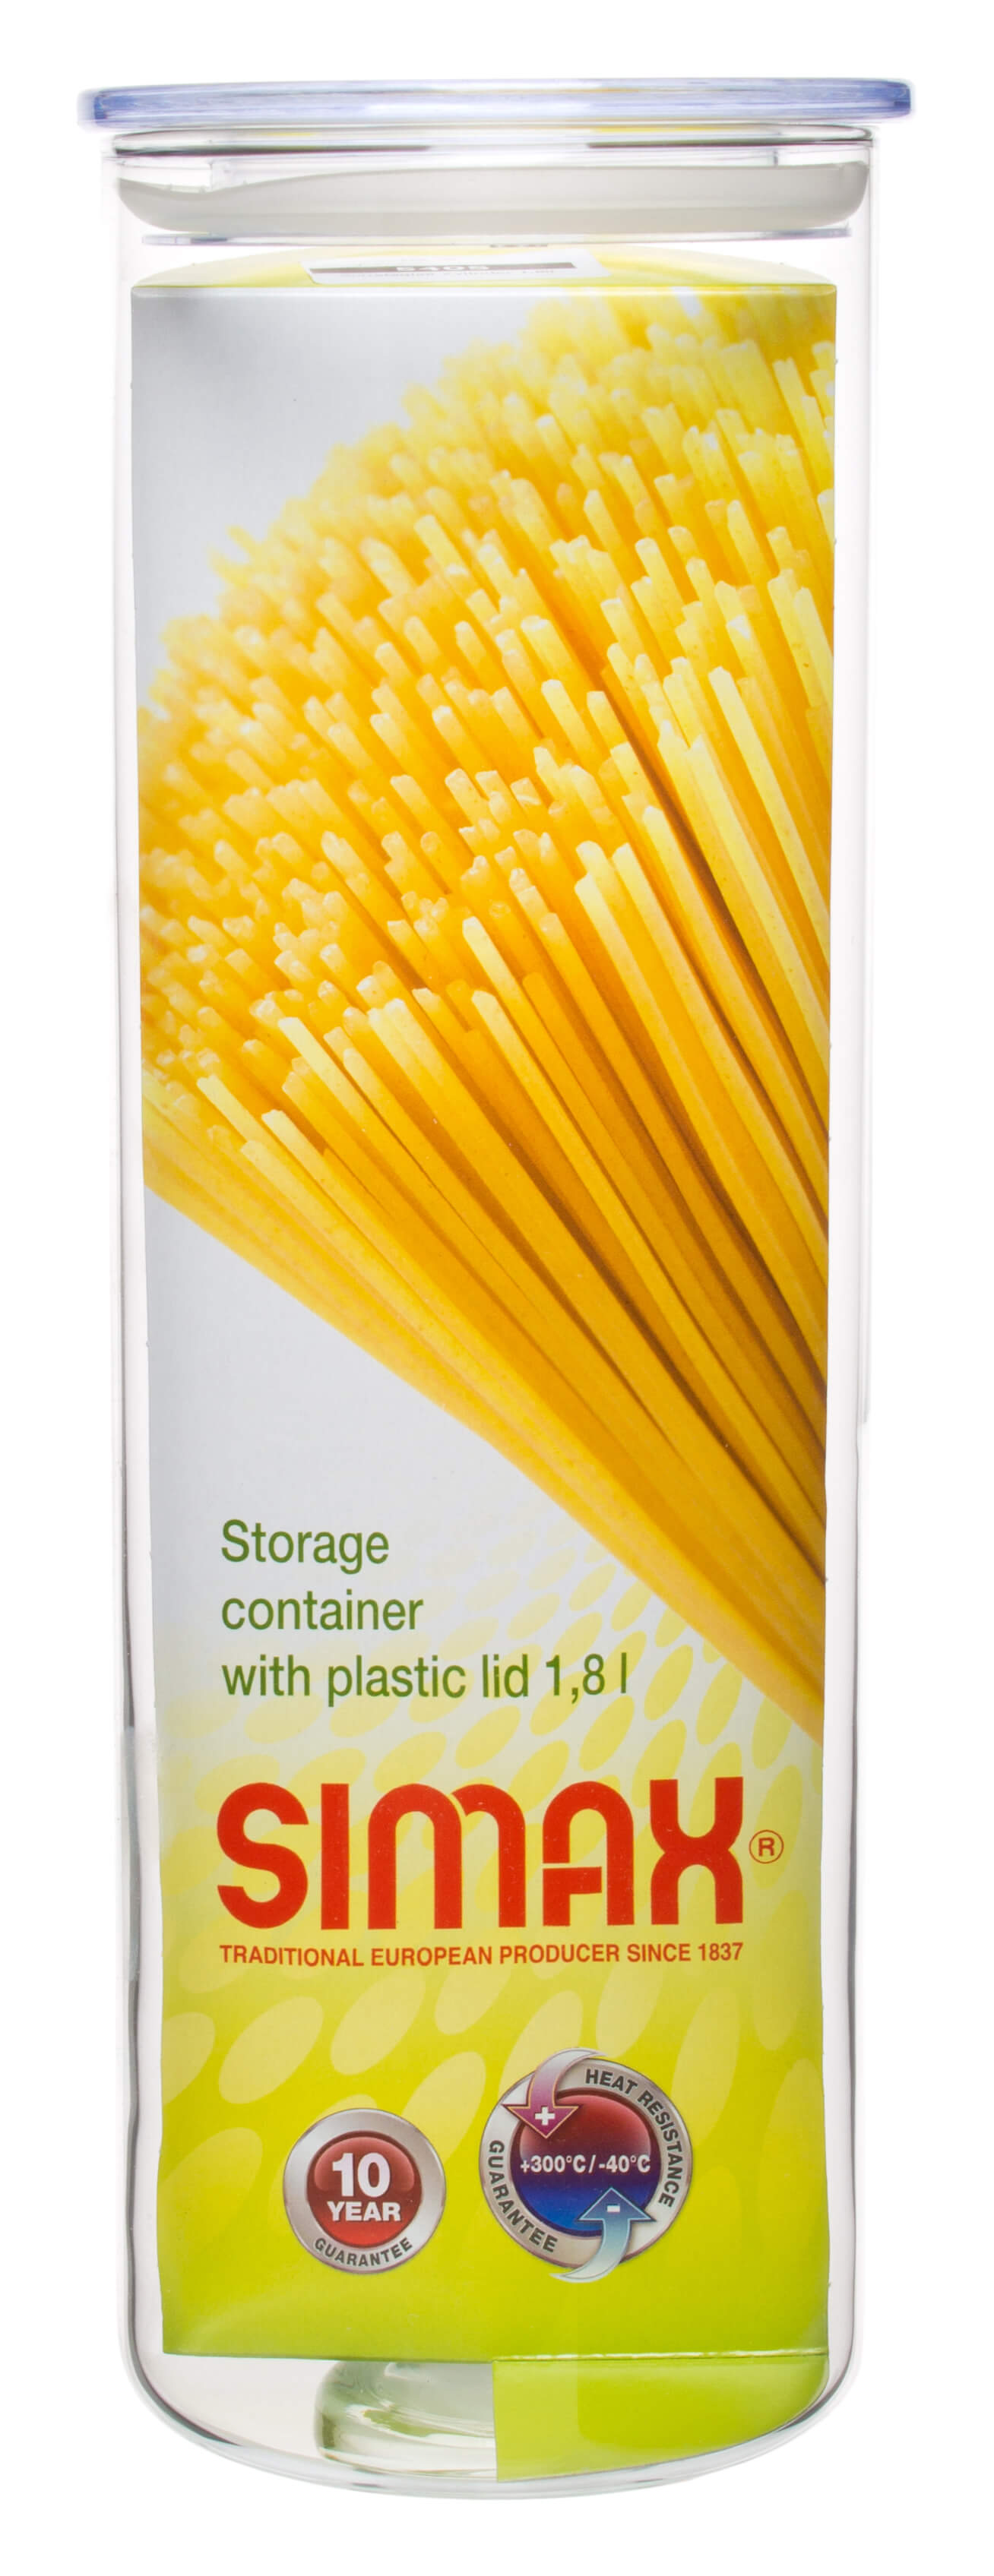 Food Storage Glass with Plastic Lid, Simax - 1,8l